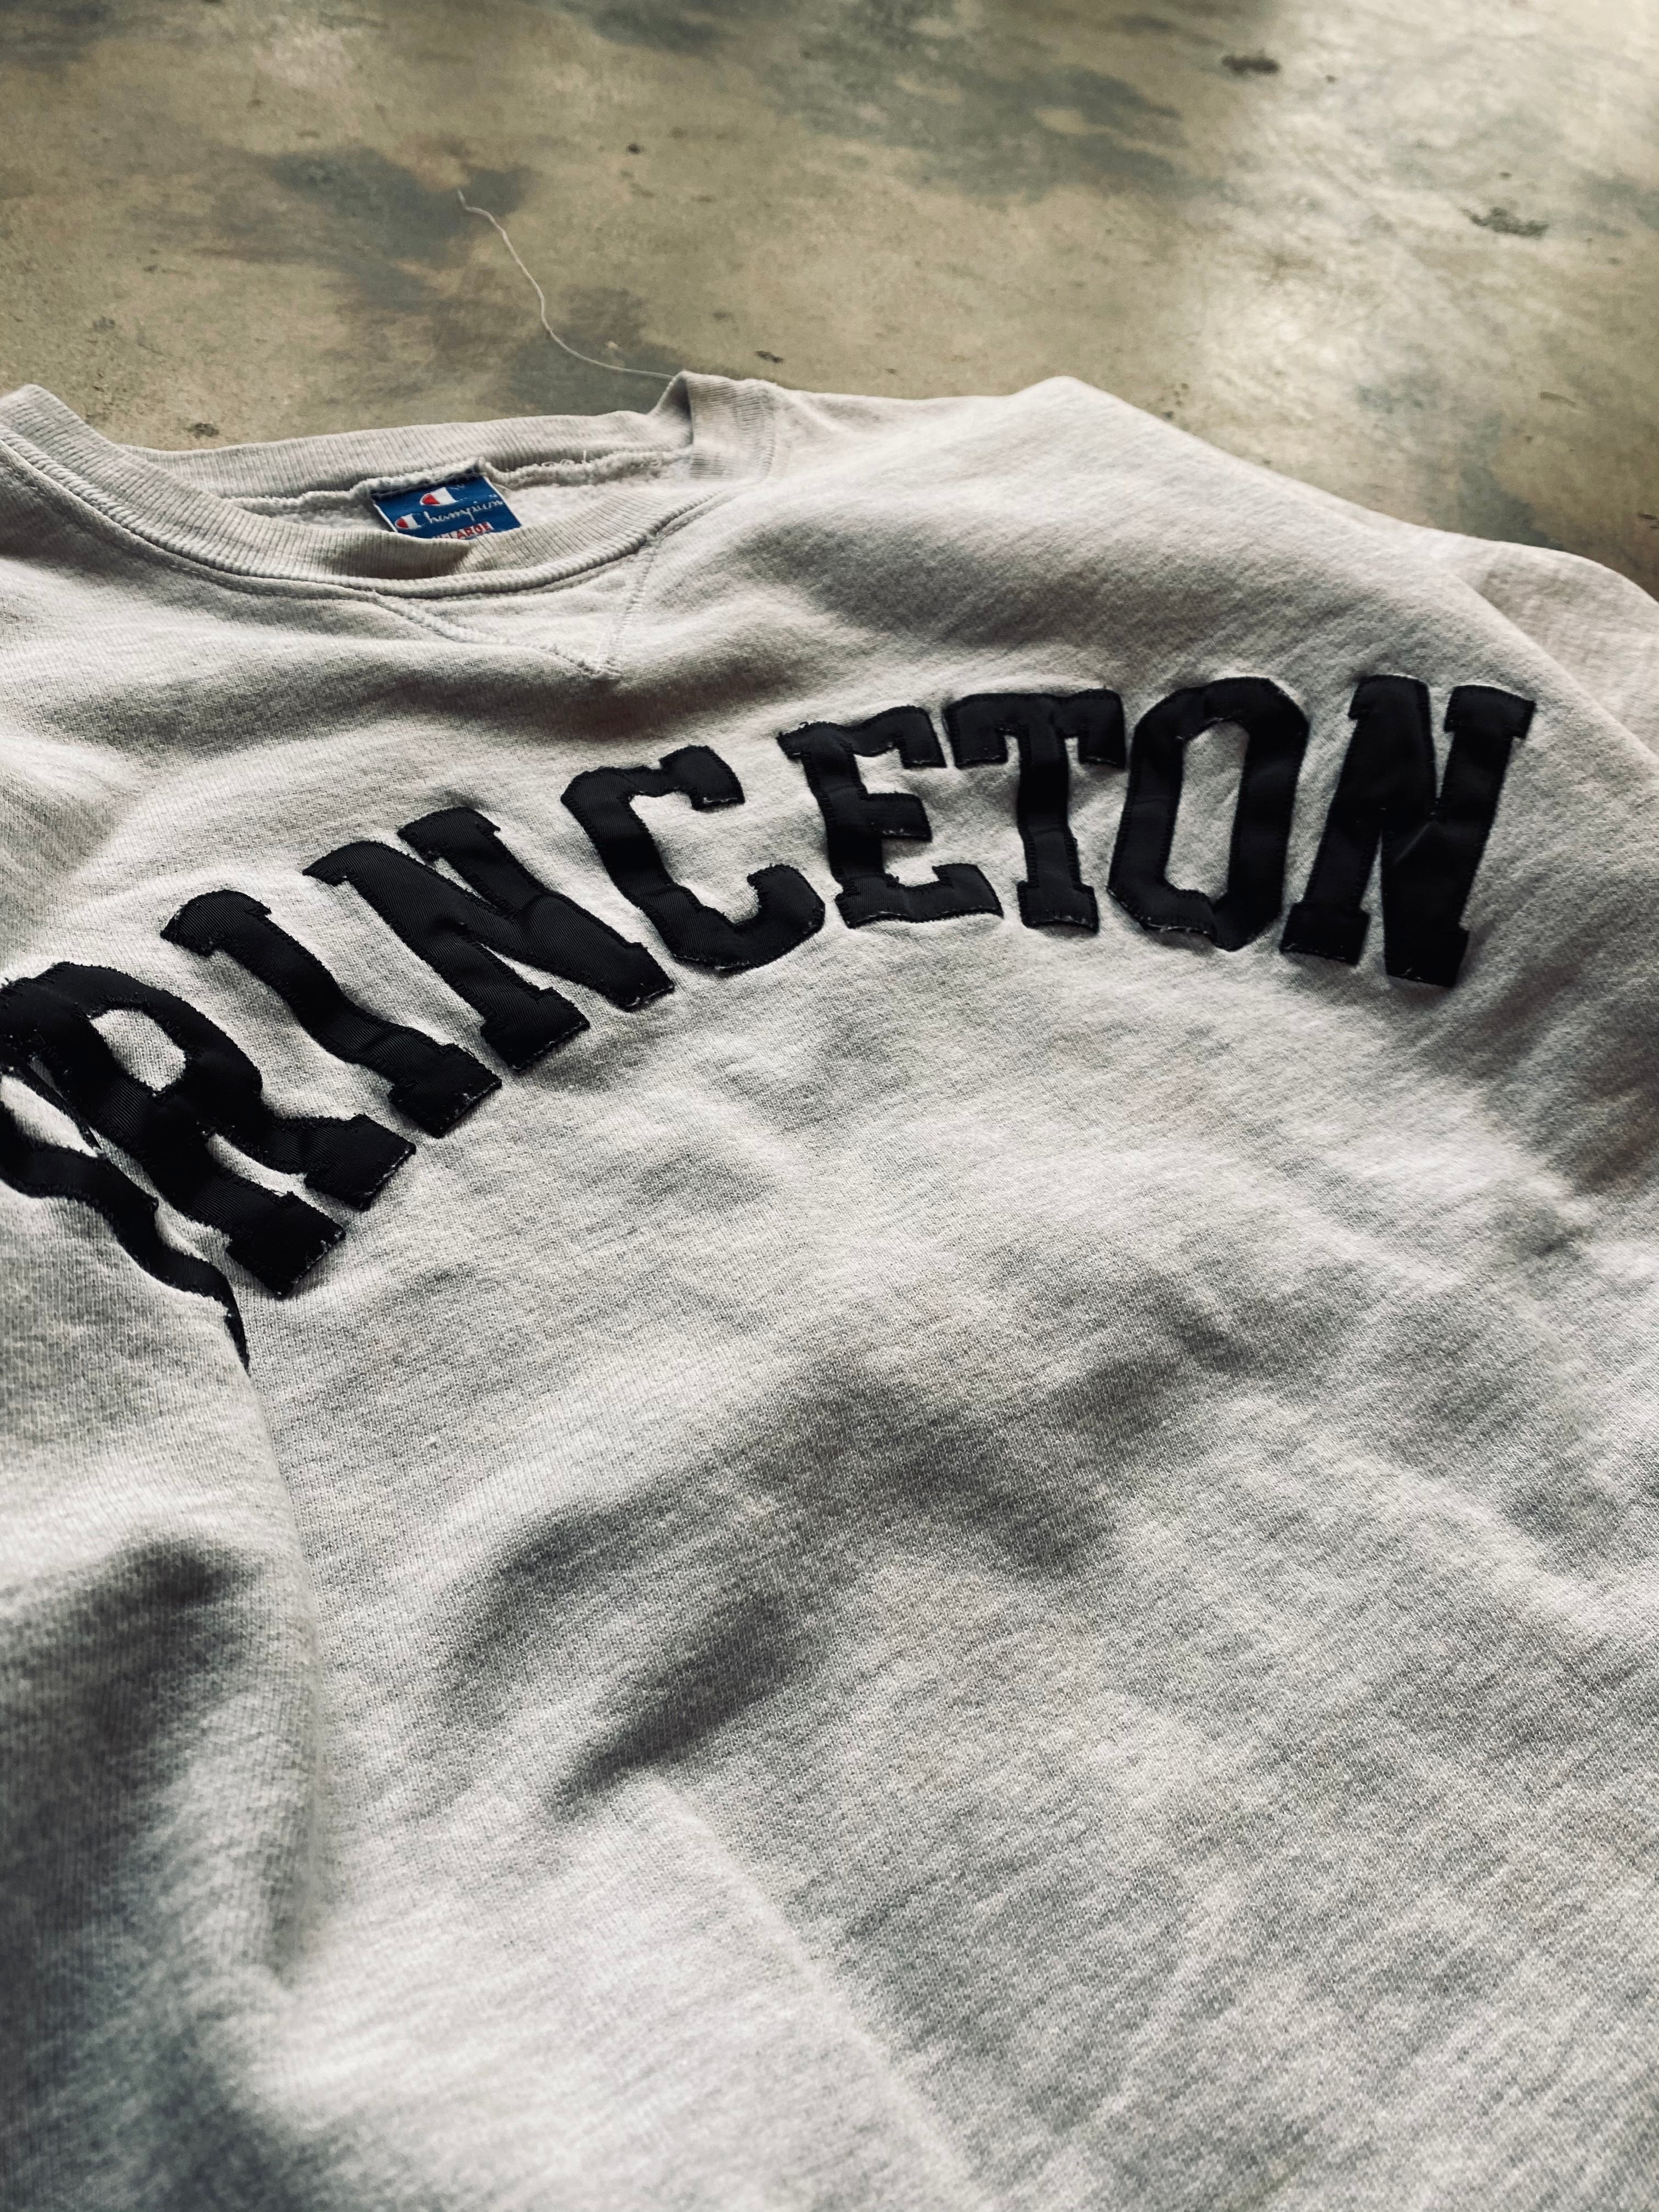 1990s Champion “Princeton” Sweatshirt